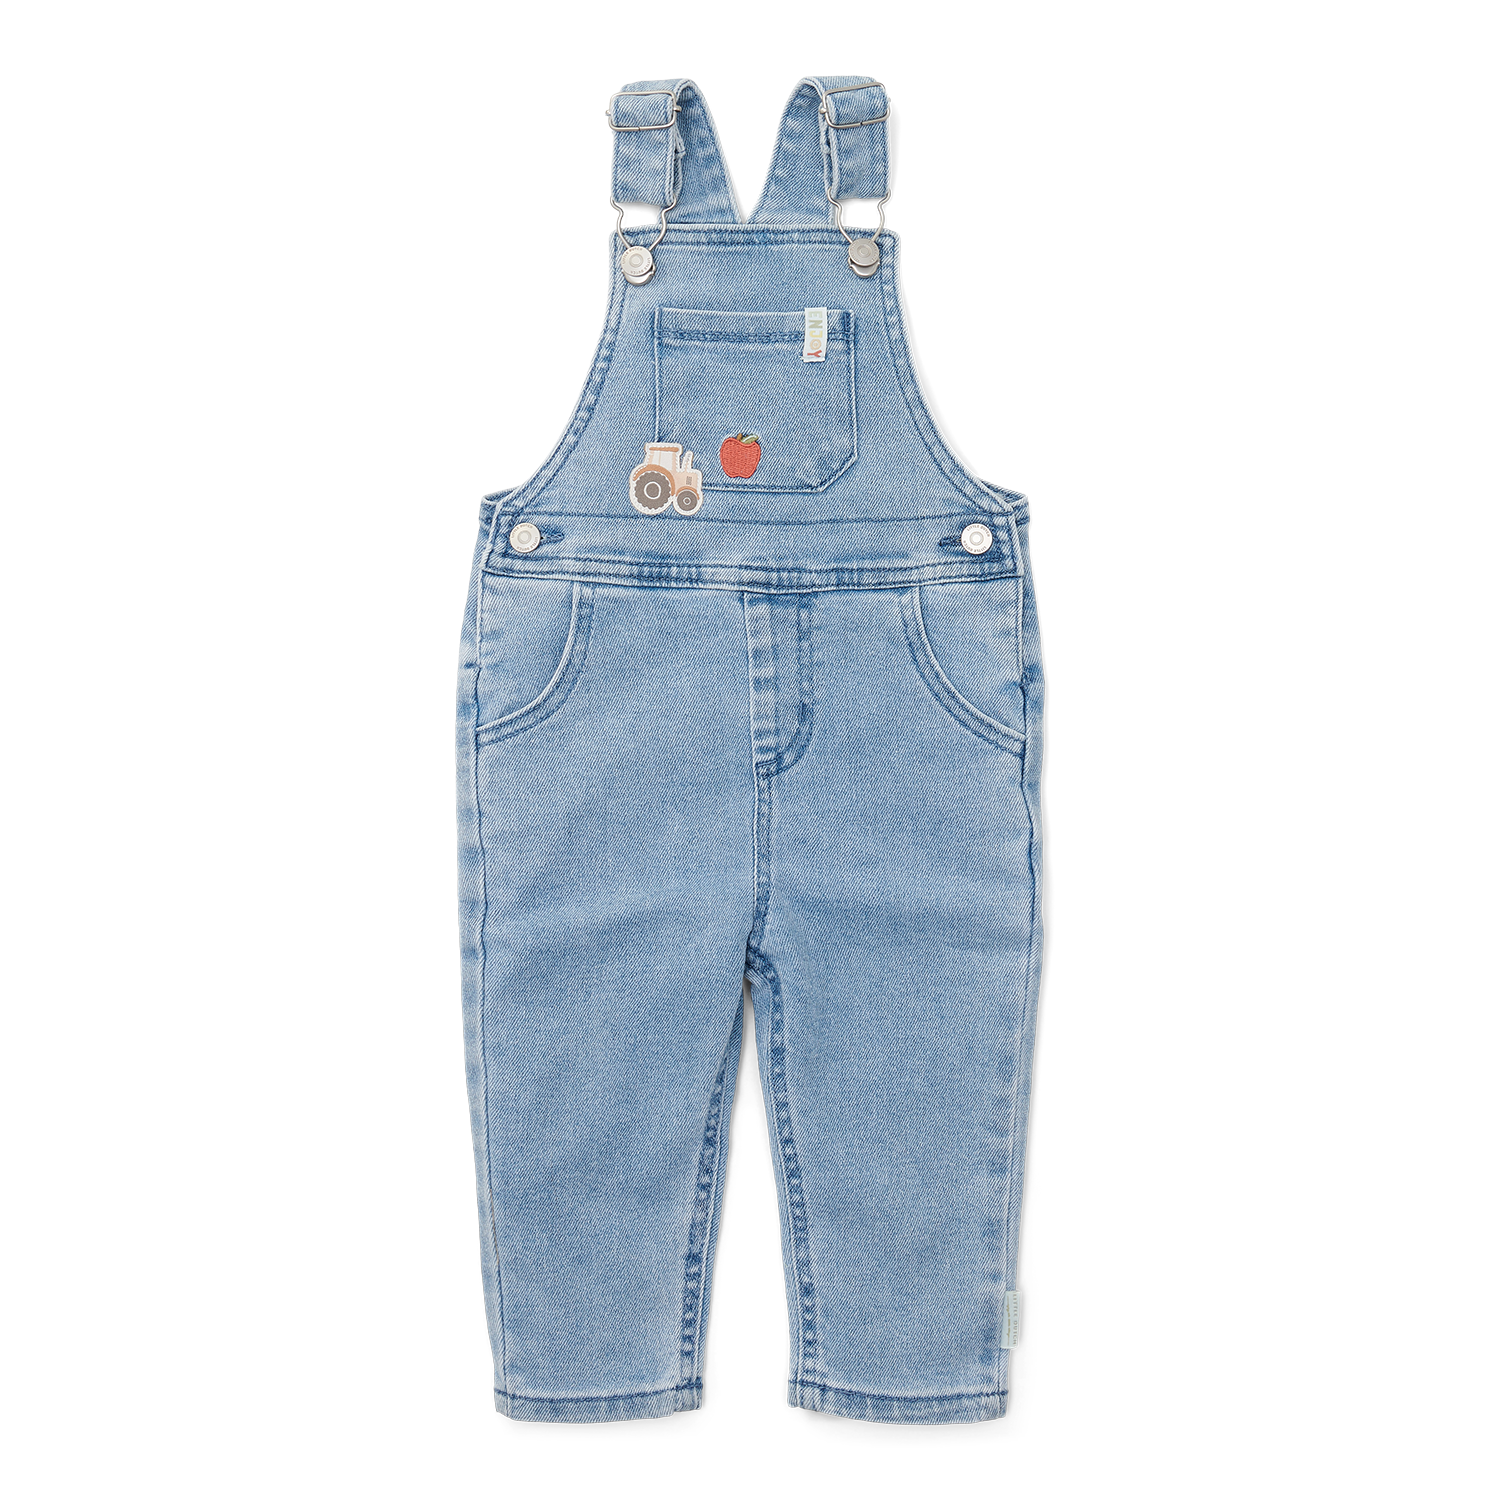 Latzhose Denim Little Farm jeans (Gr. 86)